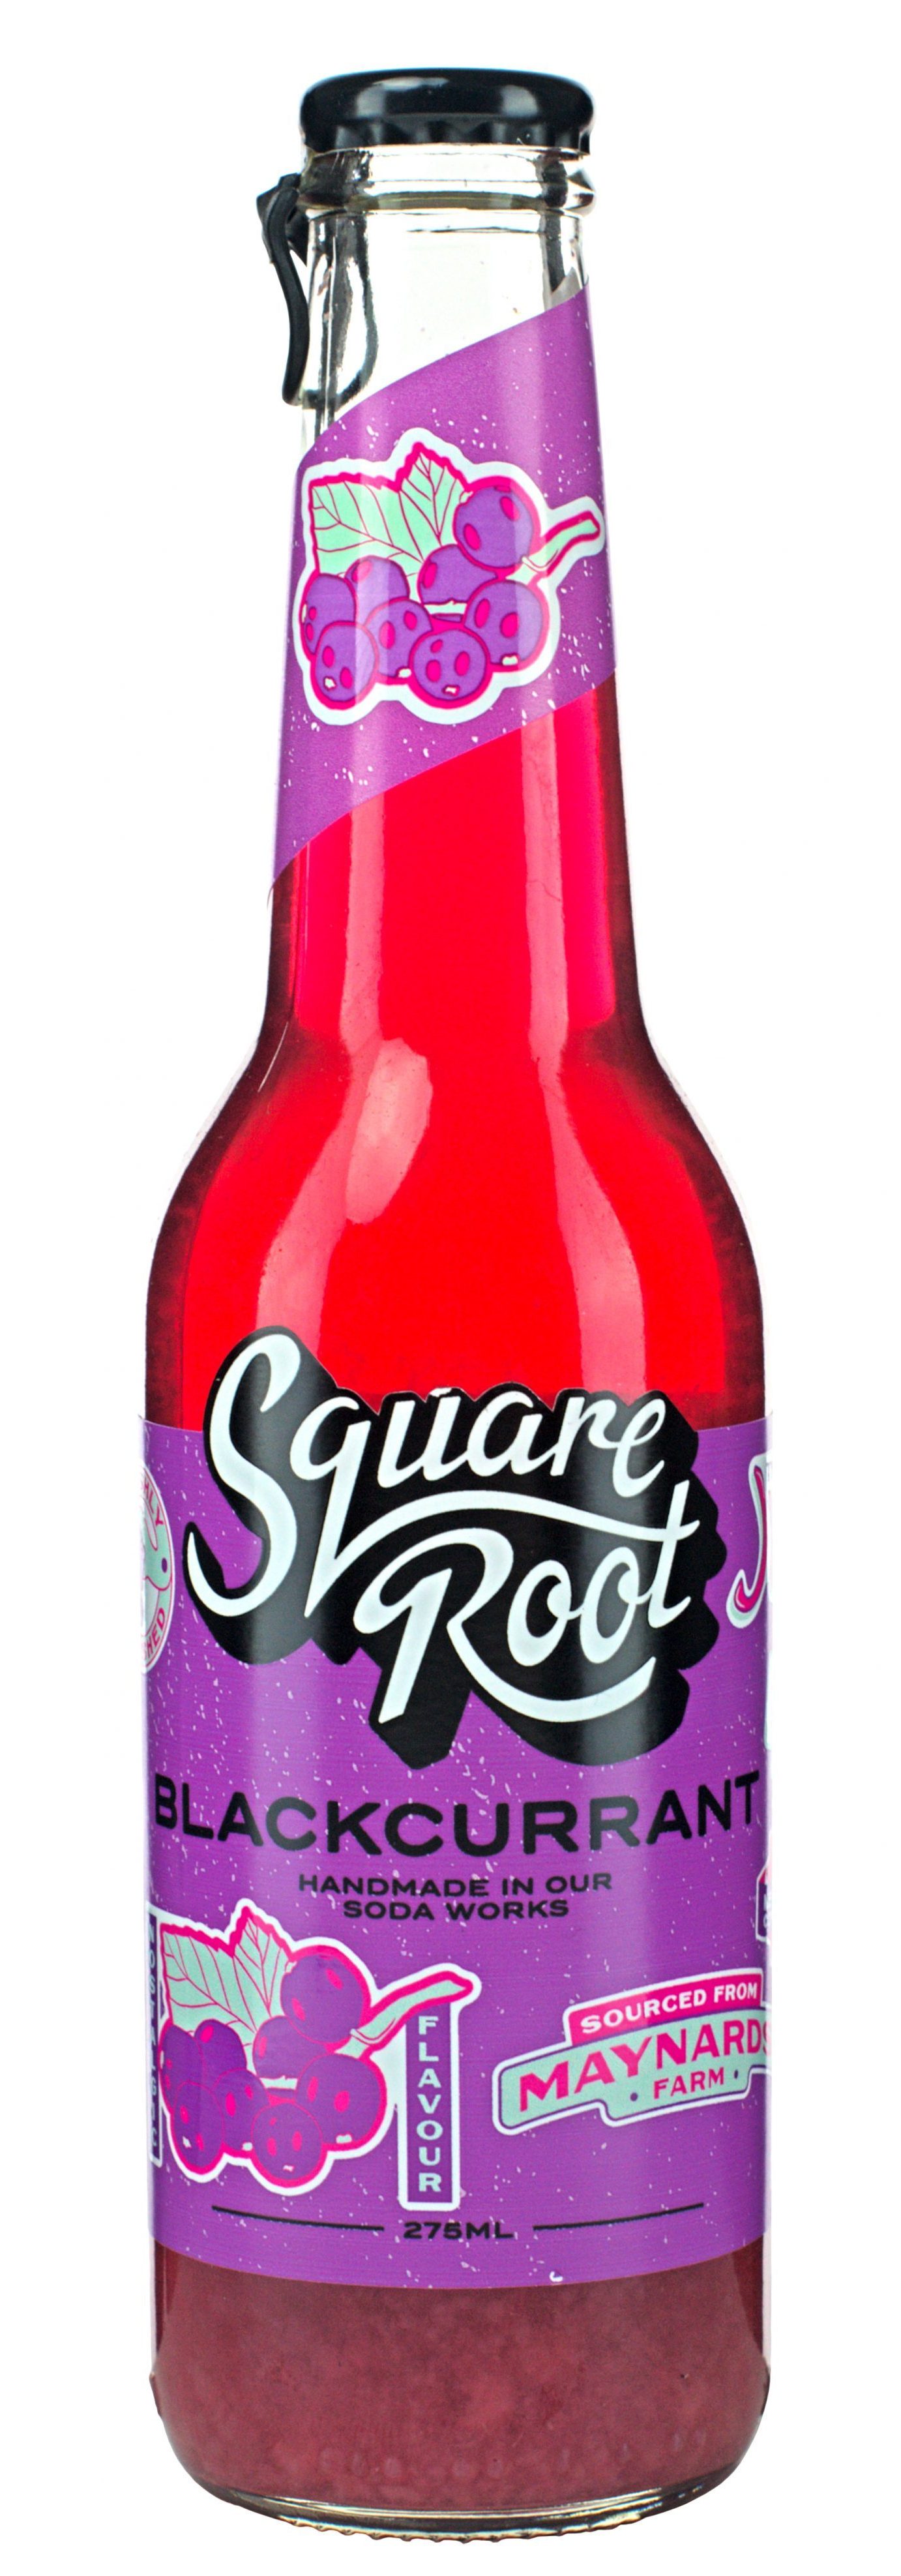 Square Root Blackcurrant Soda